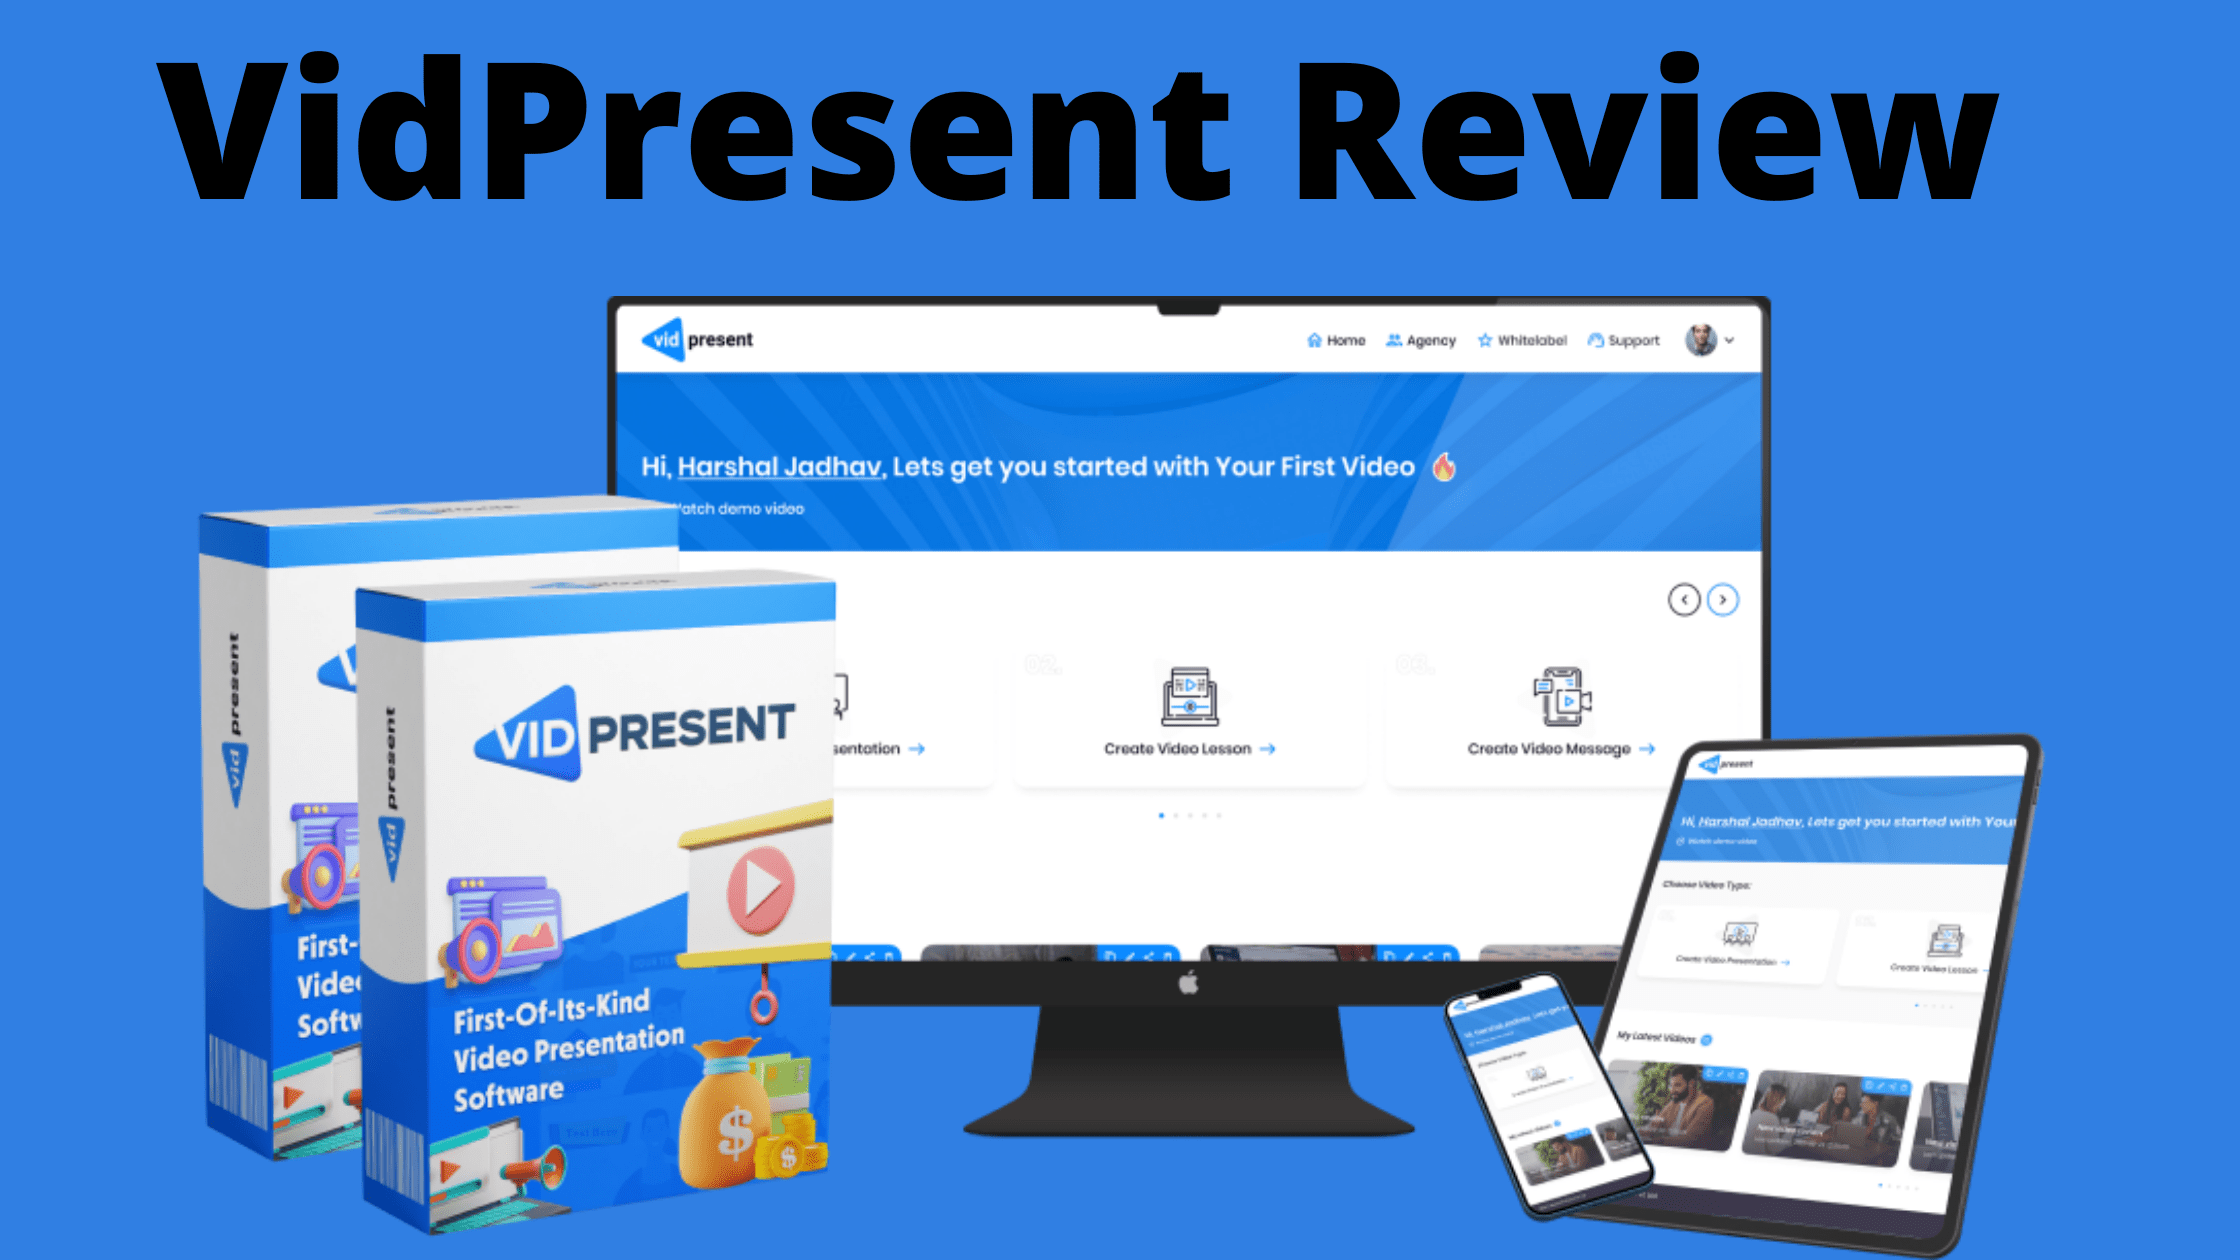 VidPresent Review